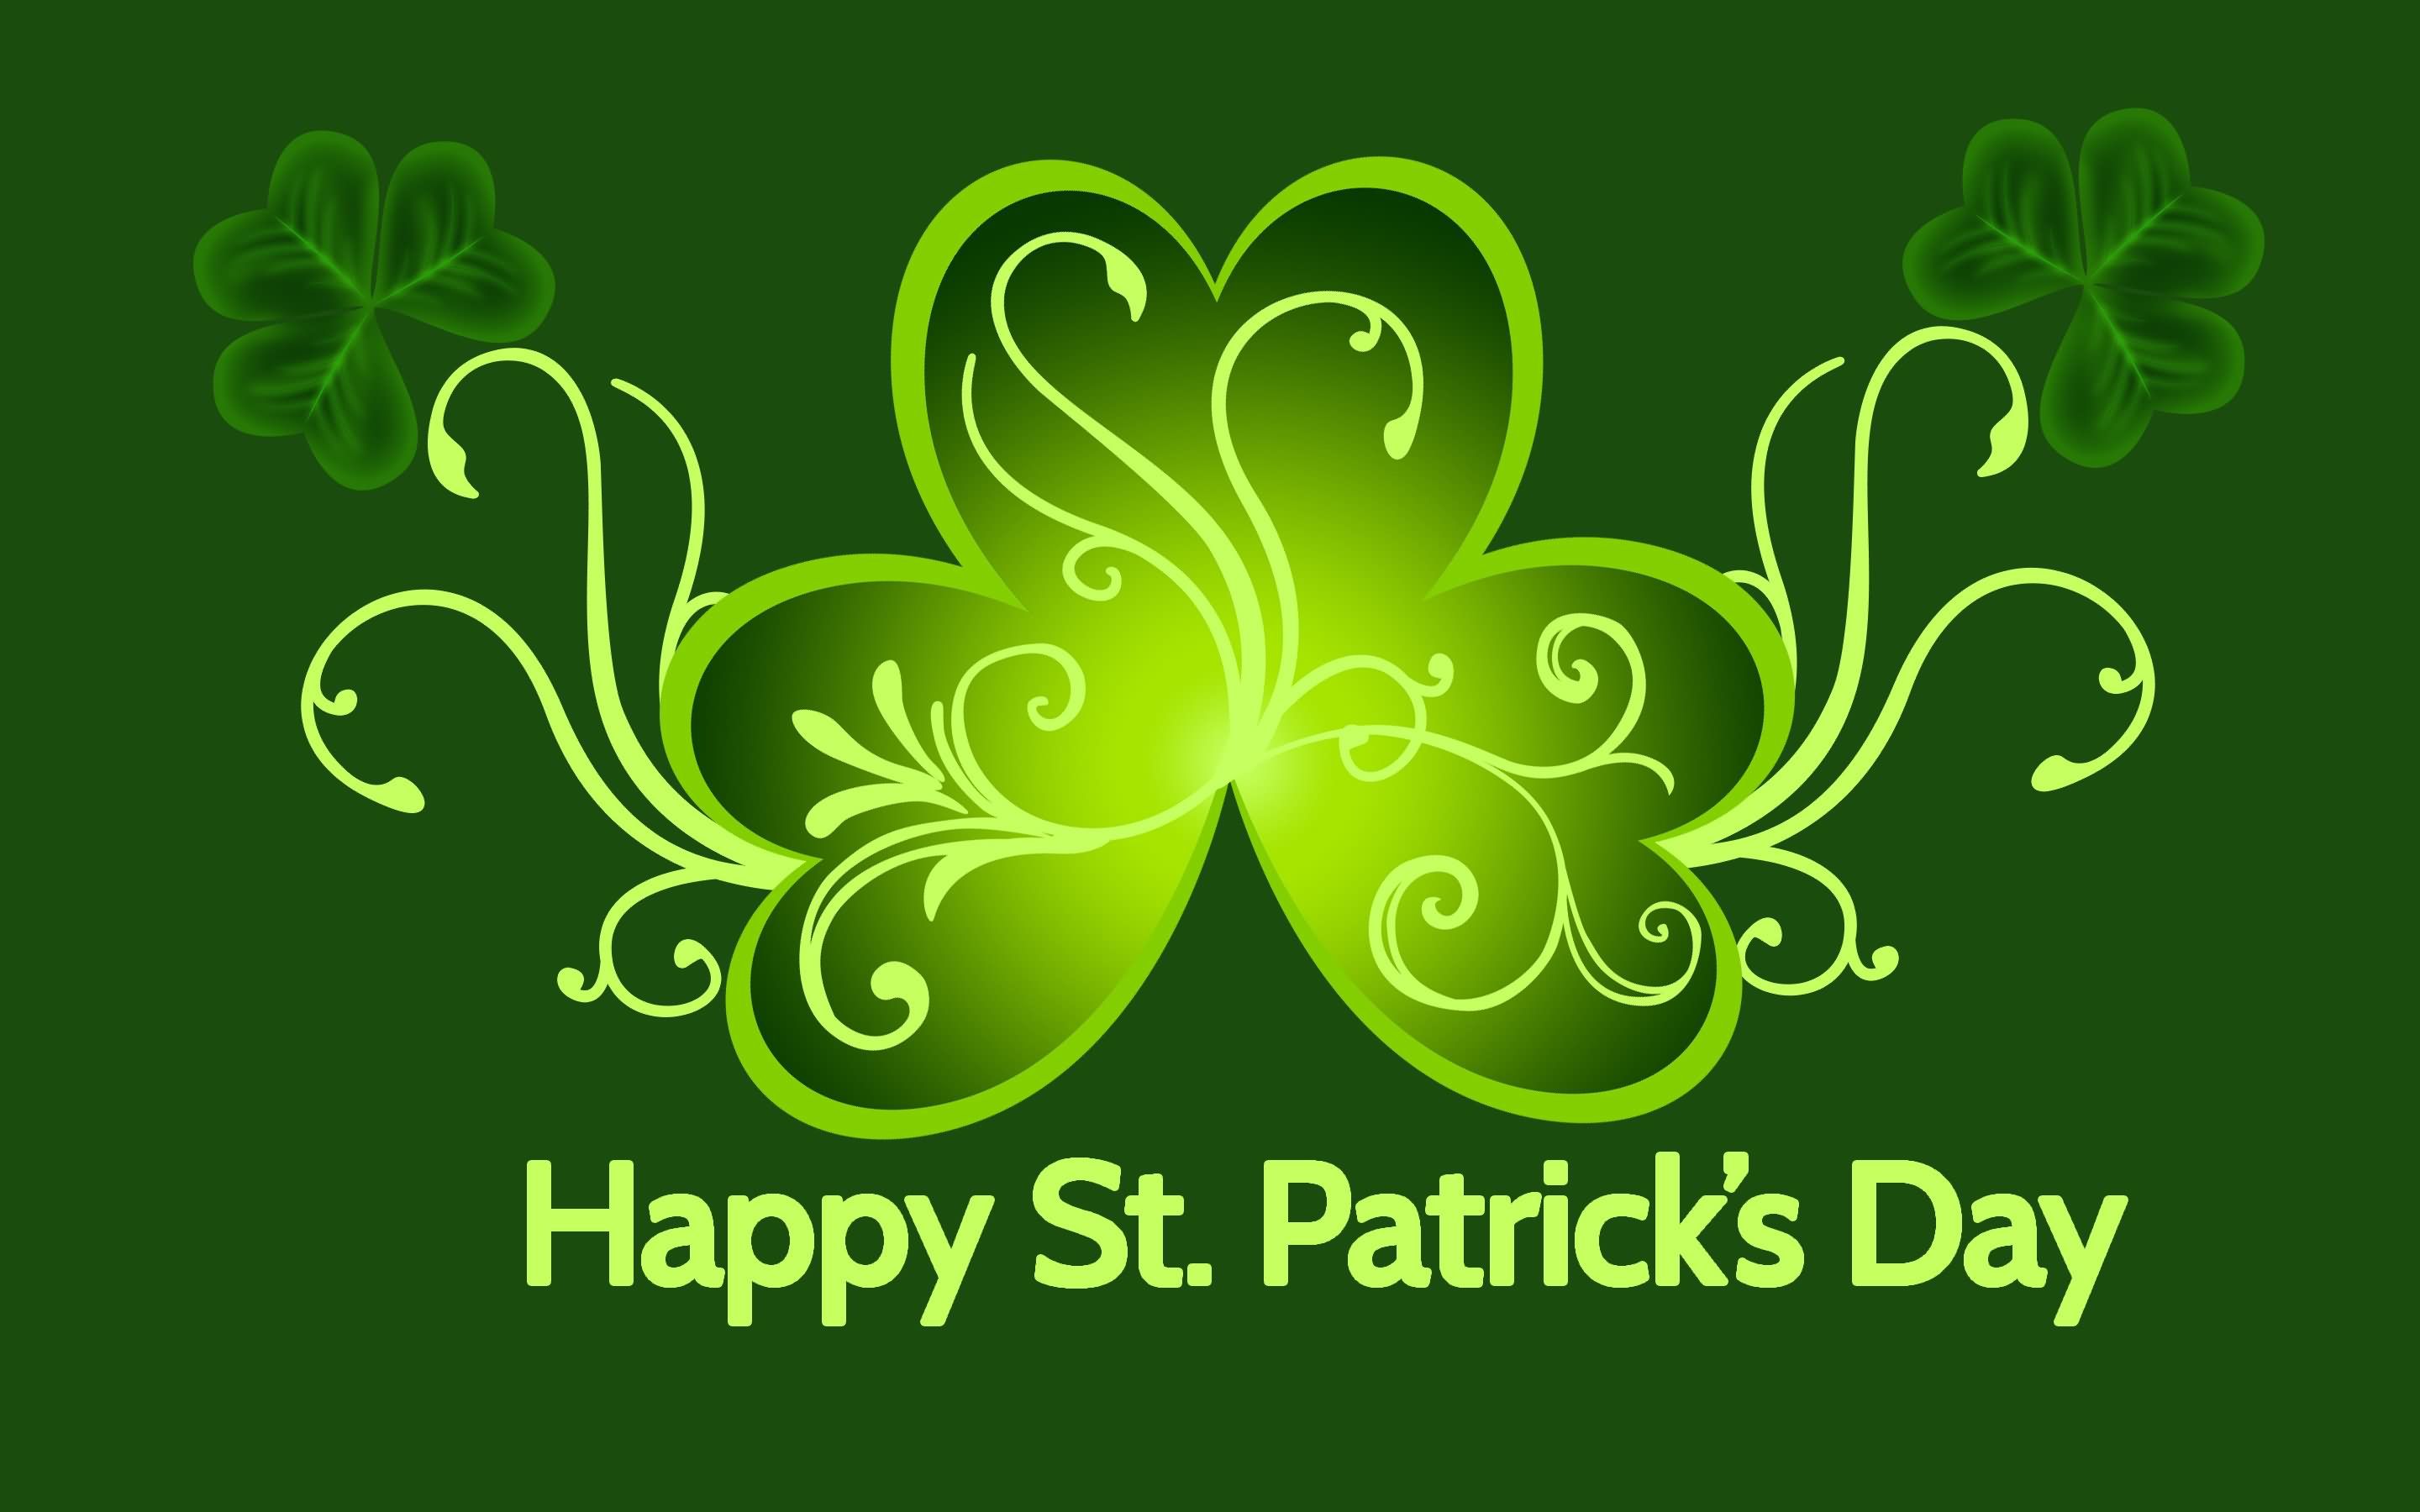 Happy St. Patrick's Day to All! #StPatricksDay